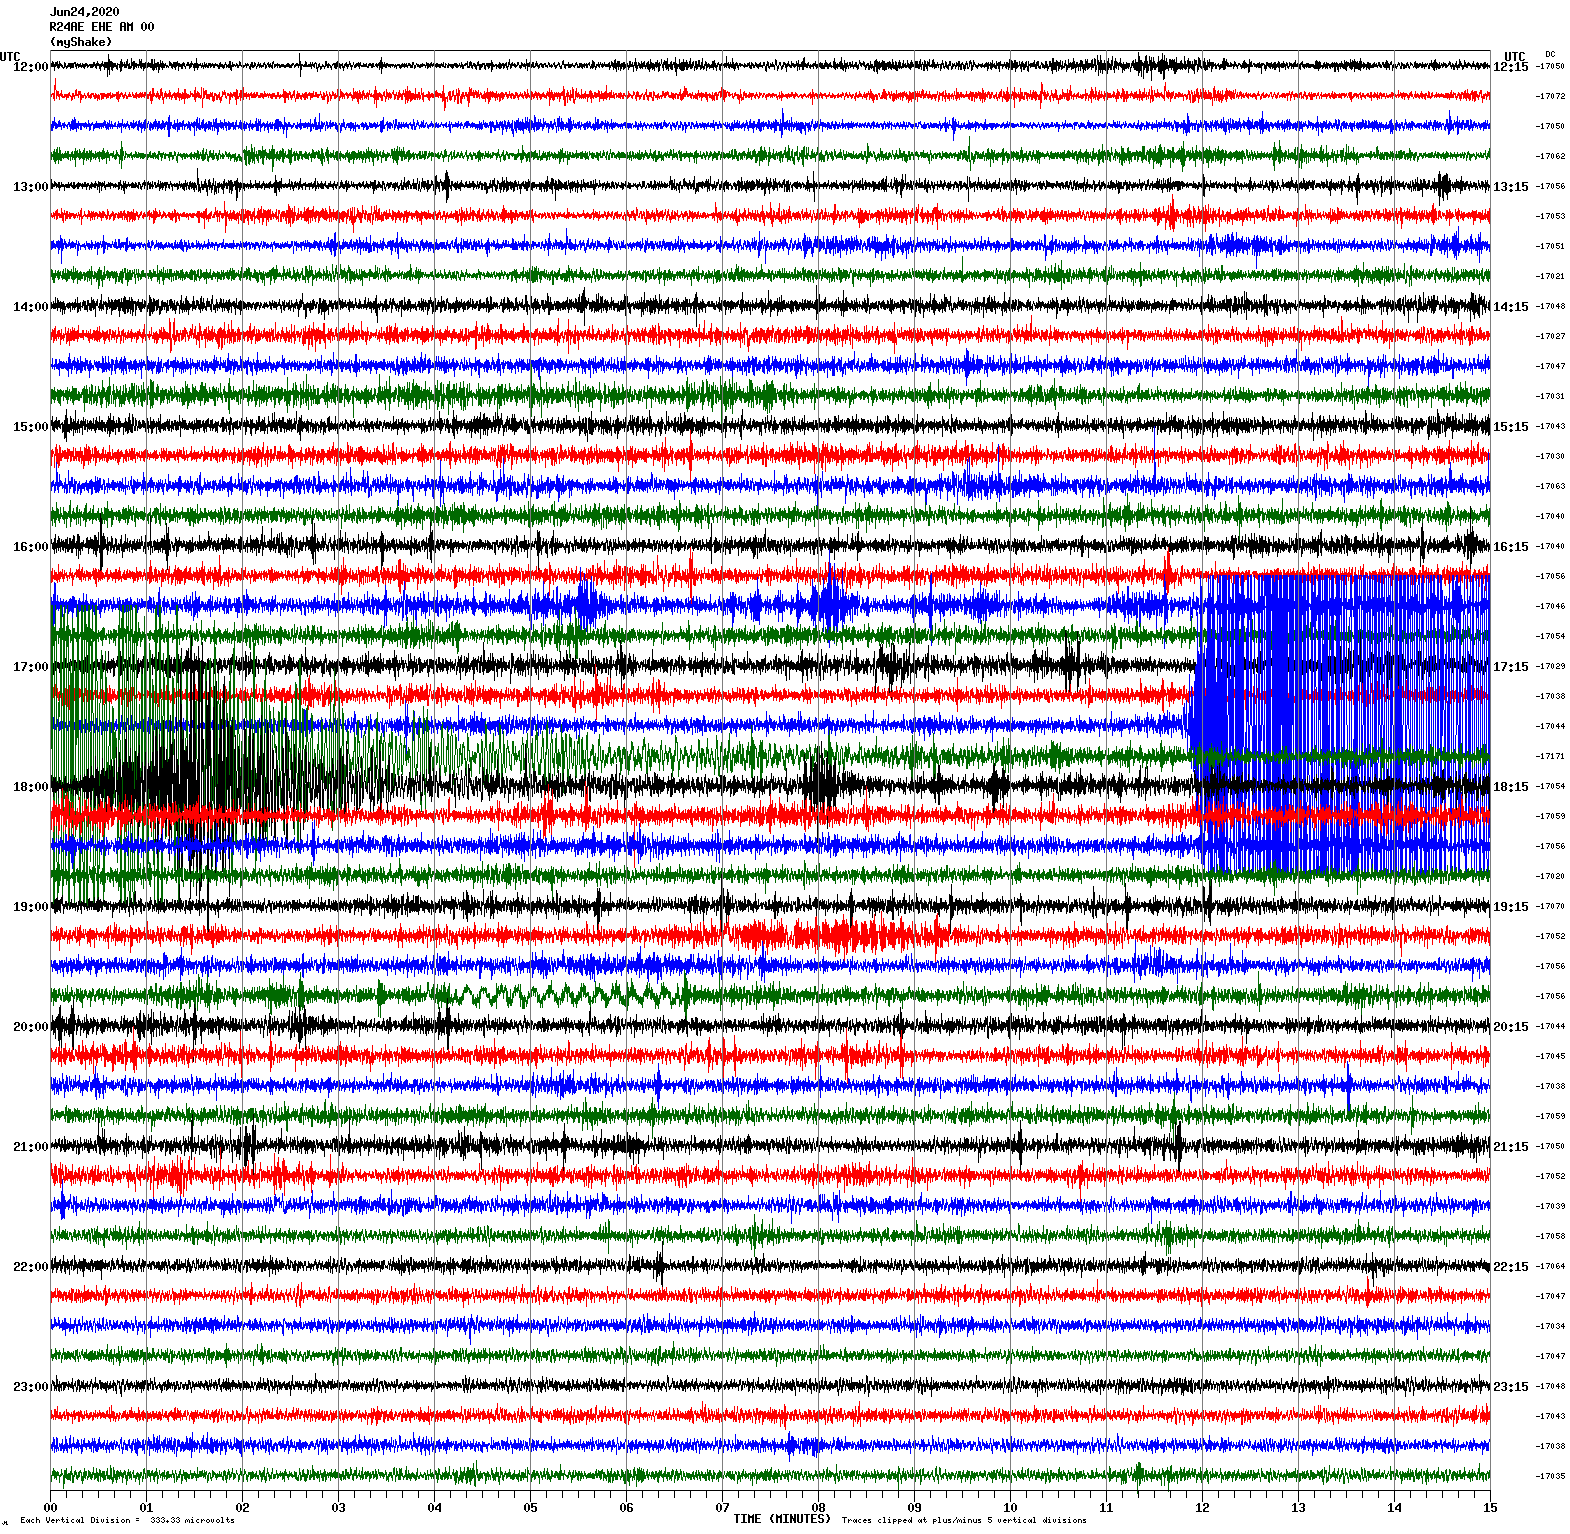 /seismic-data/R24AE/R24AE_EHE_AM_00.2020062412.gif